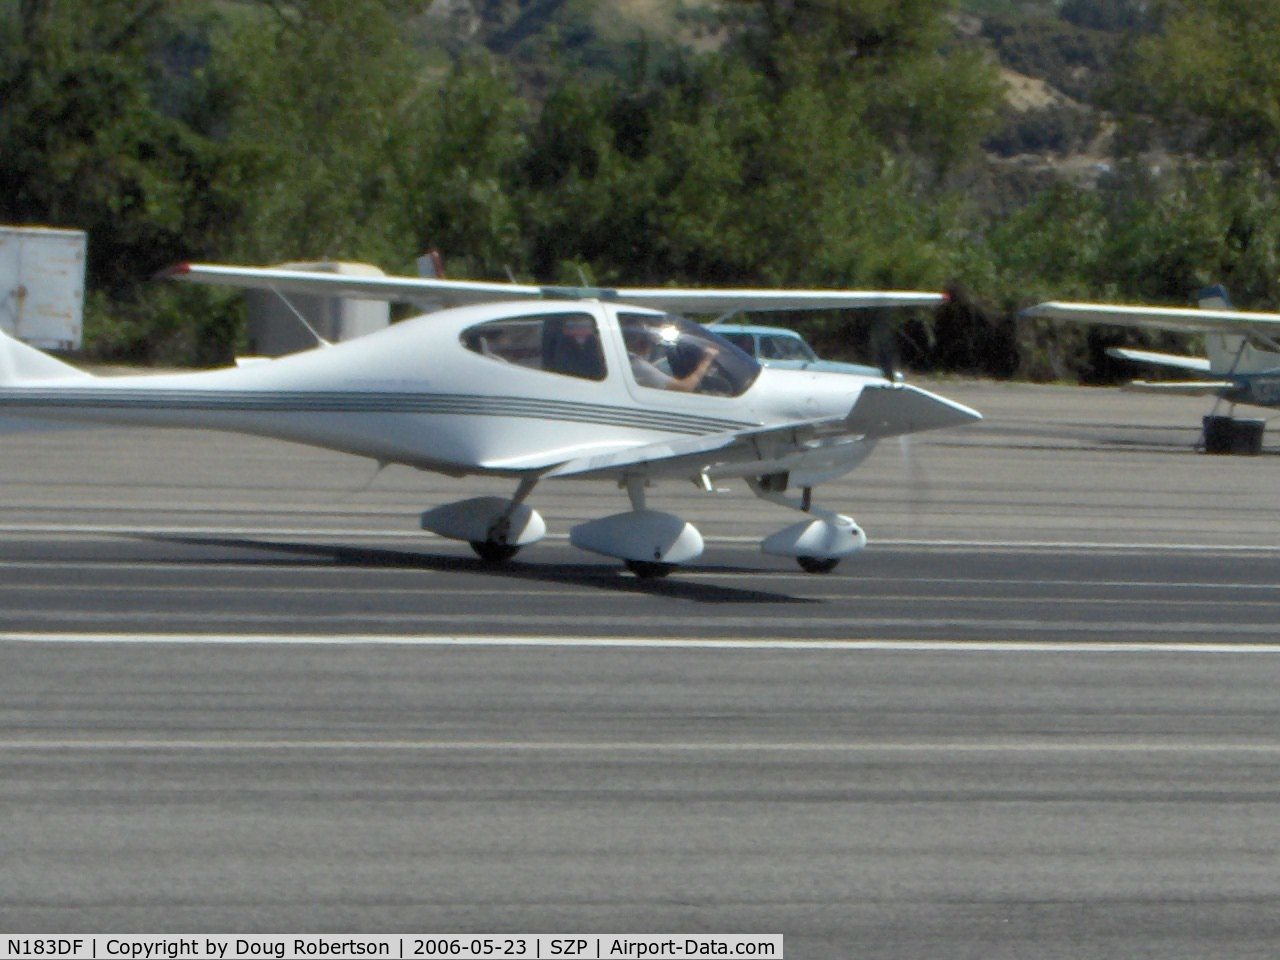 N183DF, 2004 Diamond DA-40 Diamond Star C/N 40.385, 2004 Diamond STAR DA 40, Lycoming IO-360 180 Hp, takeoff roll Runway 22